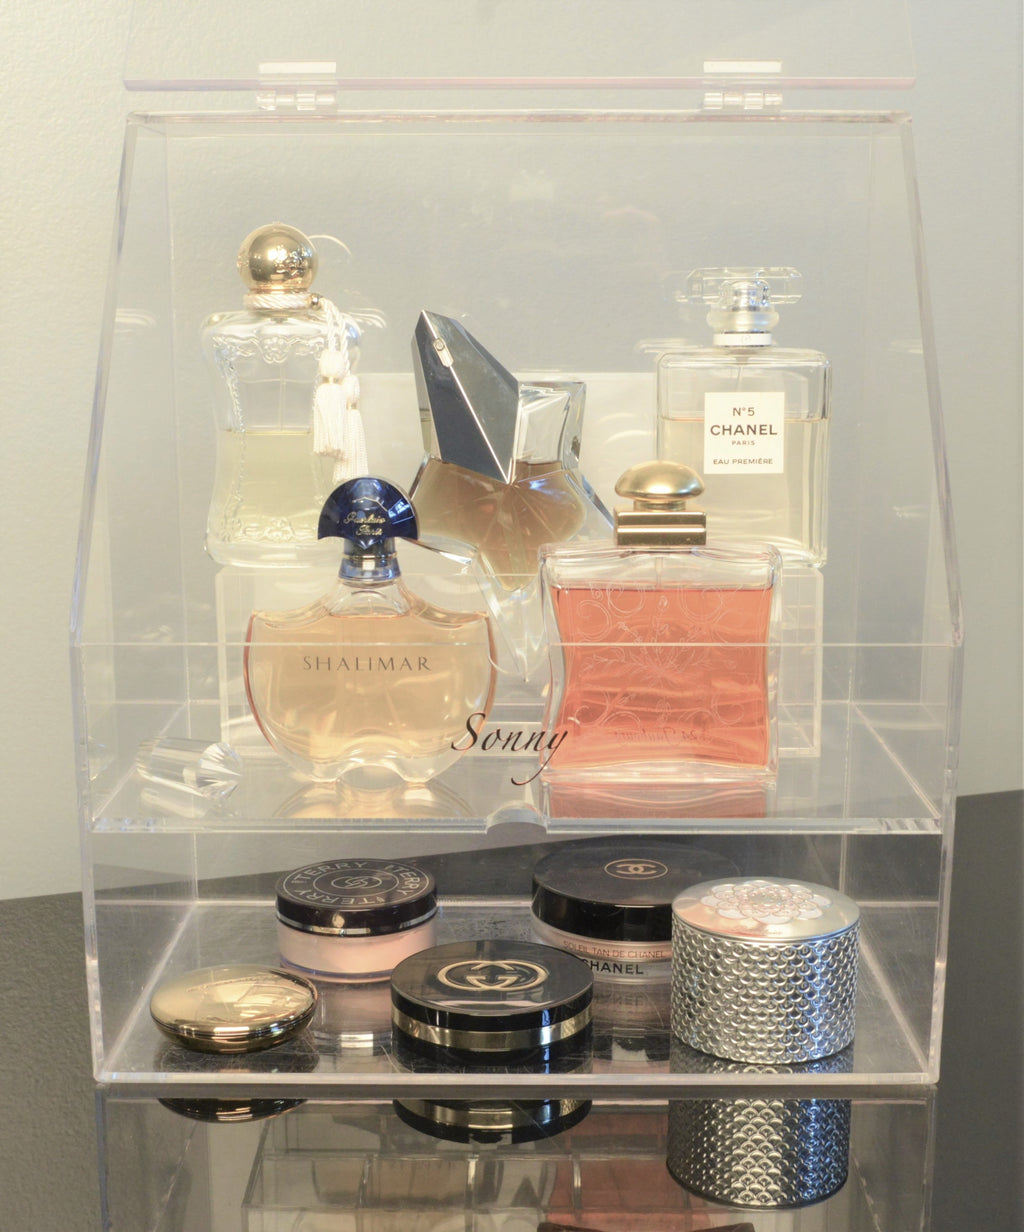 Sorbus Makeup & Jewelry Storage Case